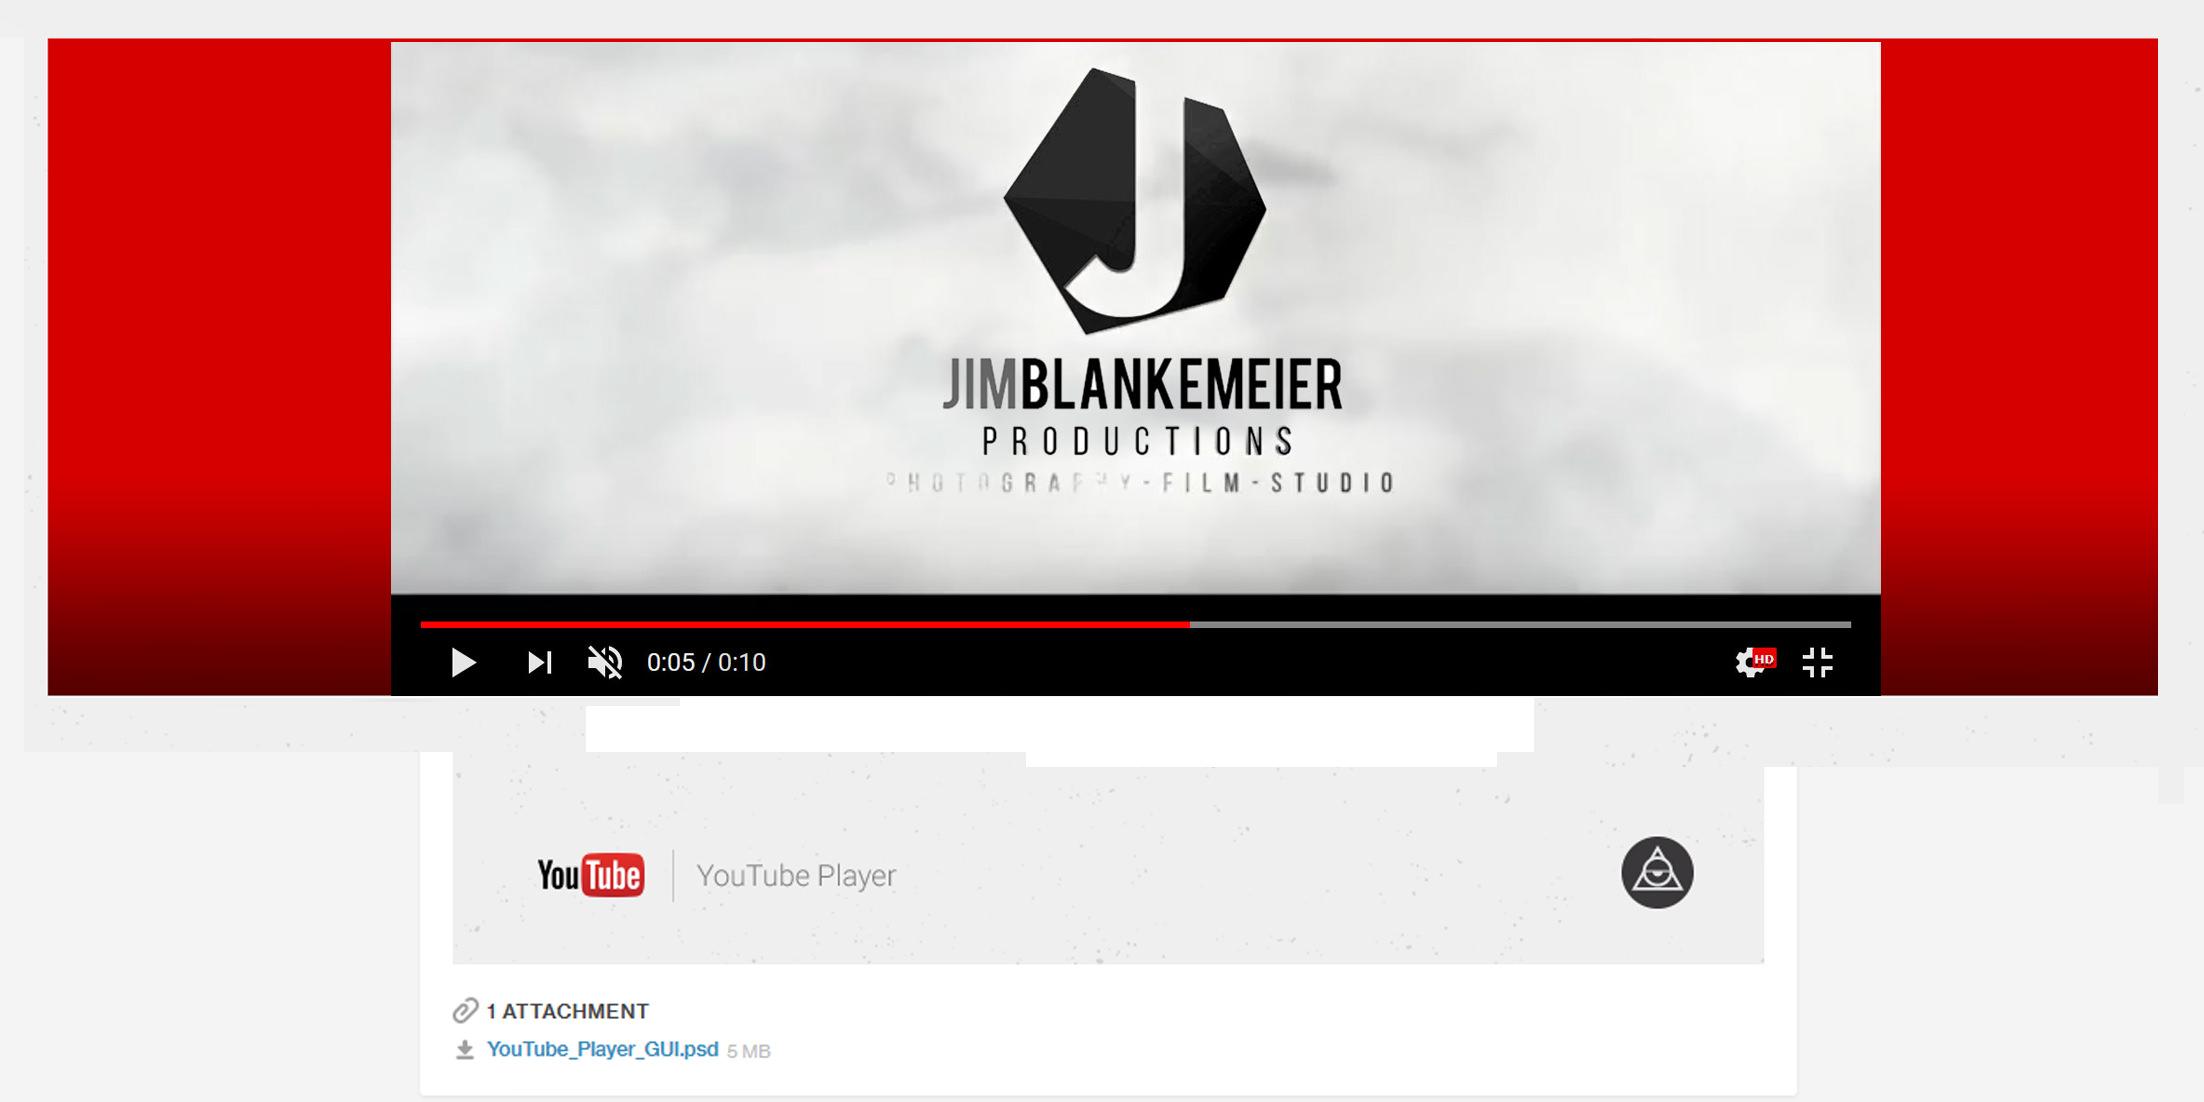 Video productions by Jim Blankemeier